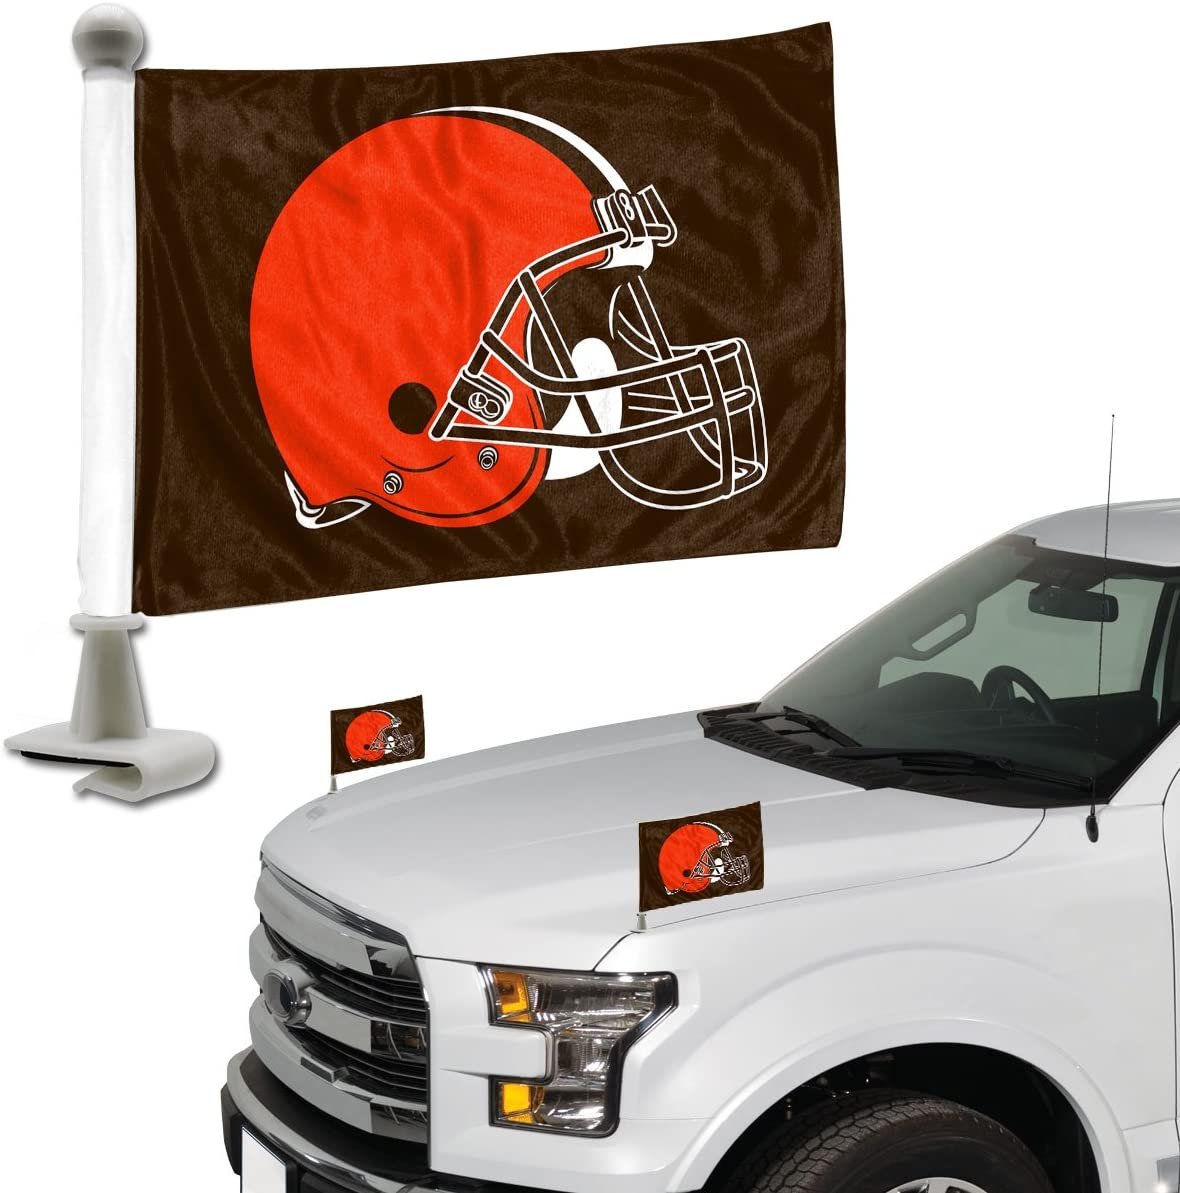 FANMATS ProMark NFL Cleveland Browns Flag Set 2-Piece Ambassador Style, Team Color, One Size